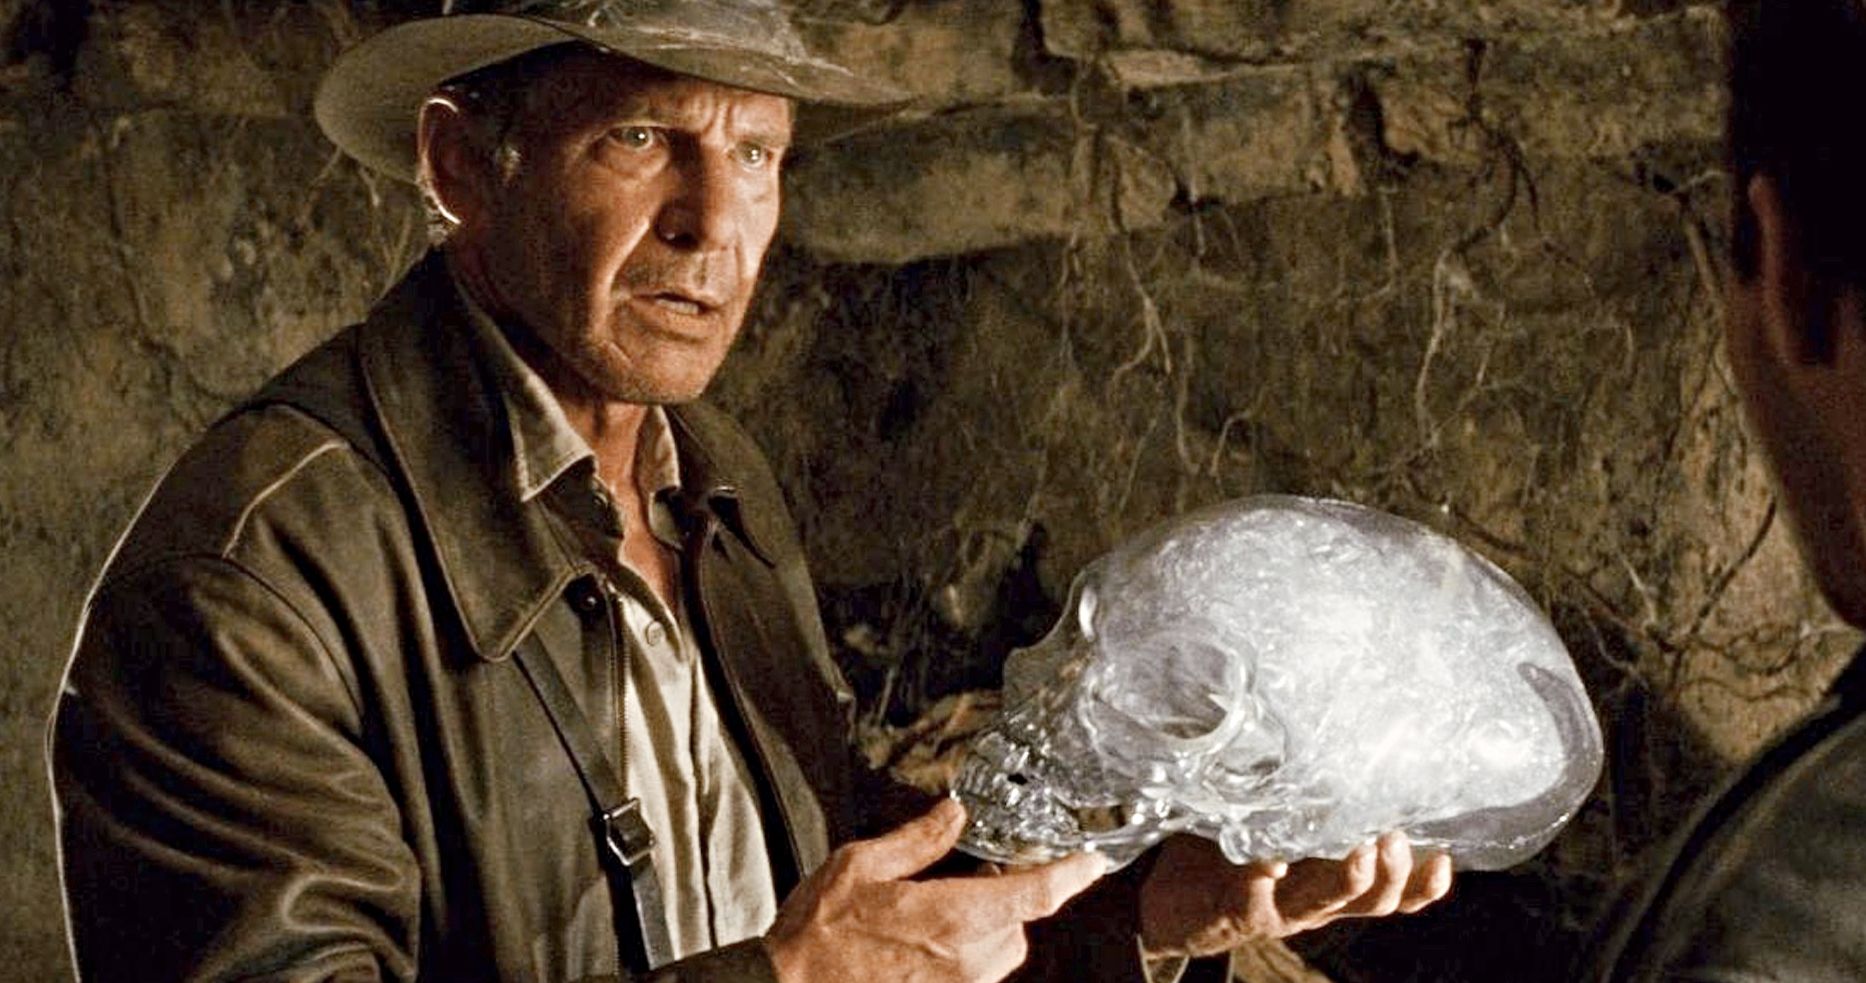 Indiana Jones 5 to Finally Begin Shooting in Spring 2020?